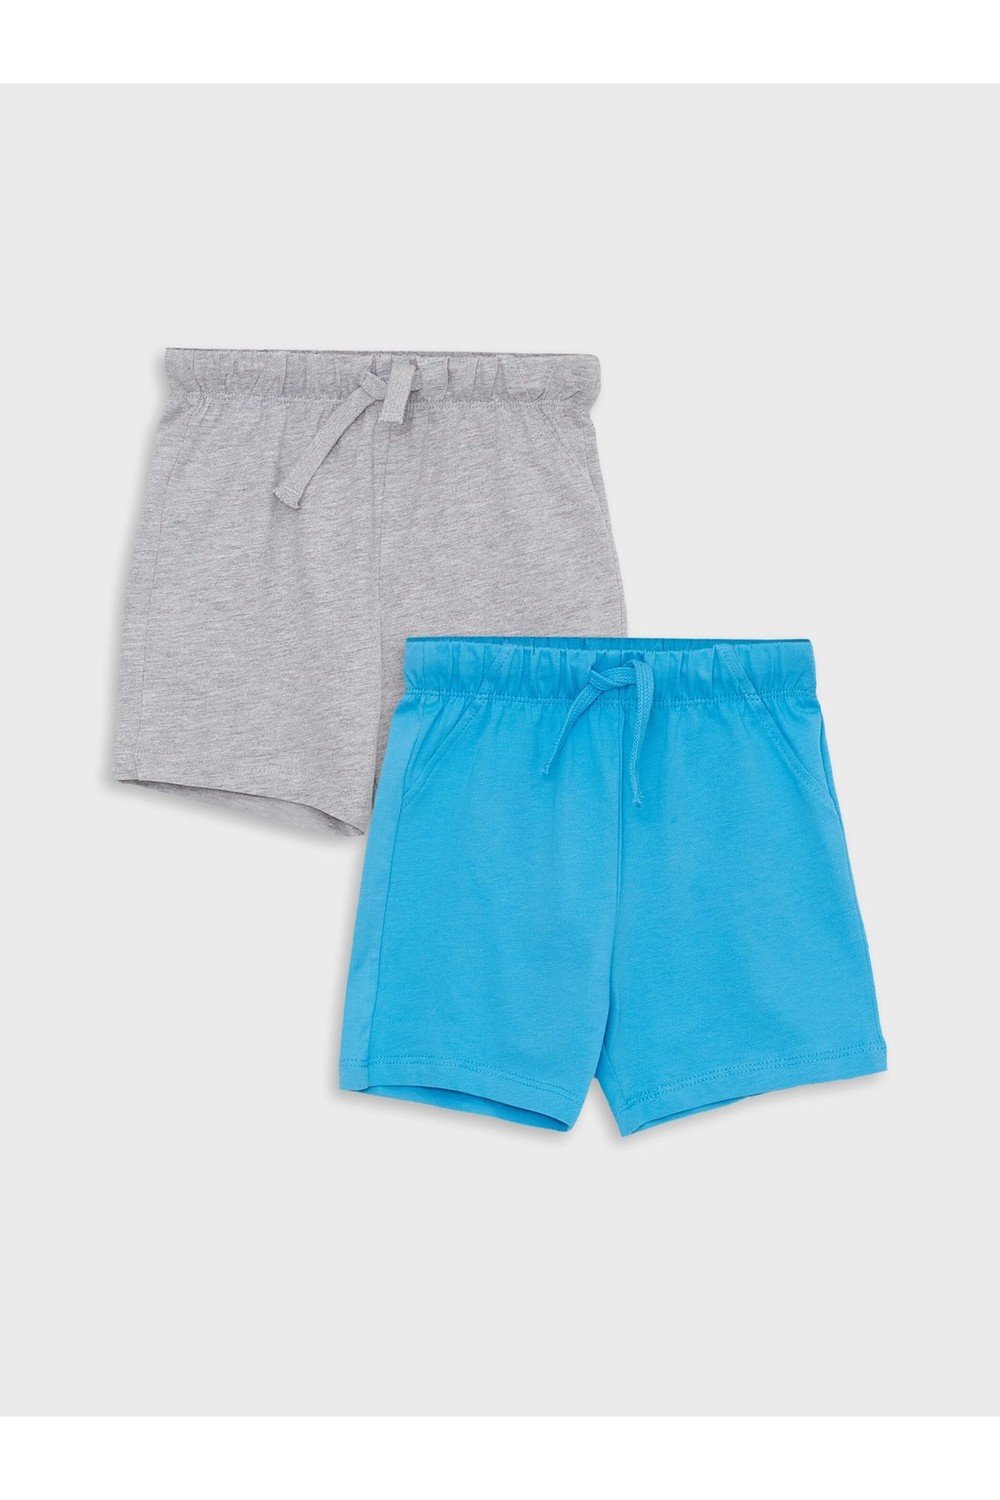 LC Waikiki Basic Baby Boy Shorts with Elastic Waist 2-Pack